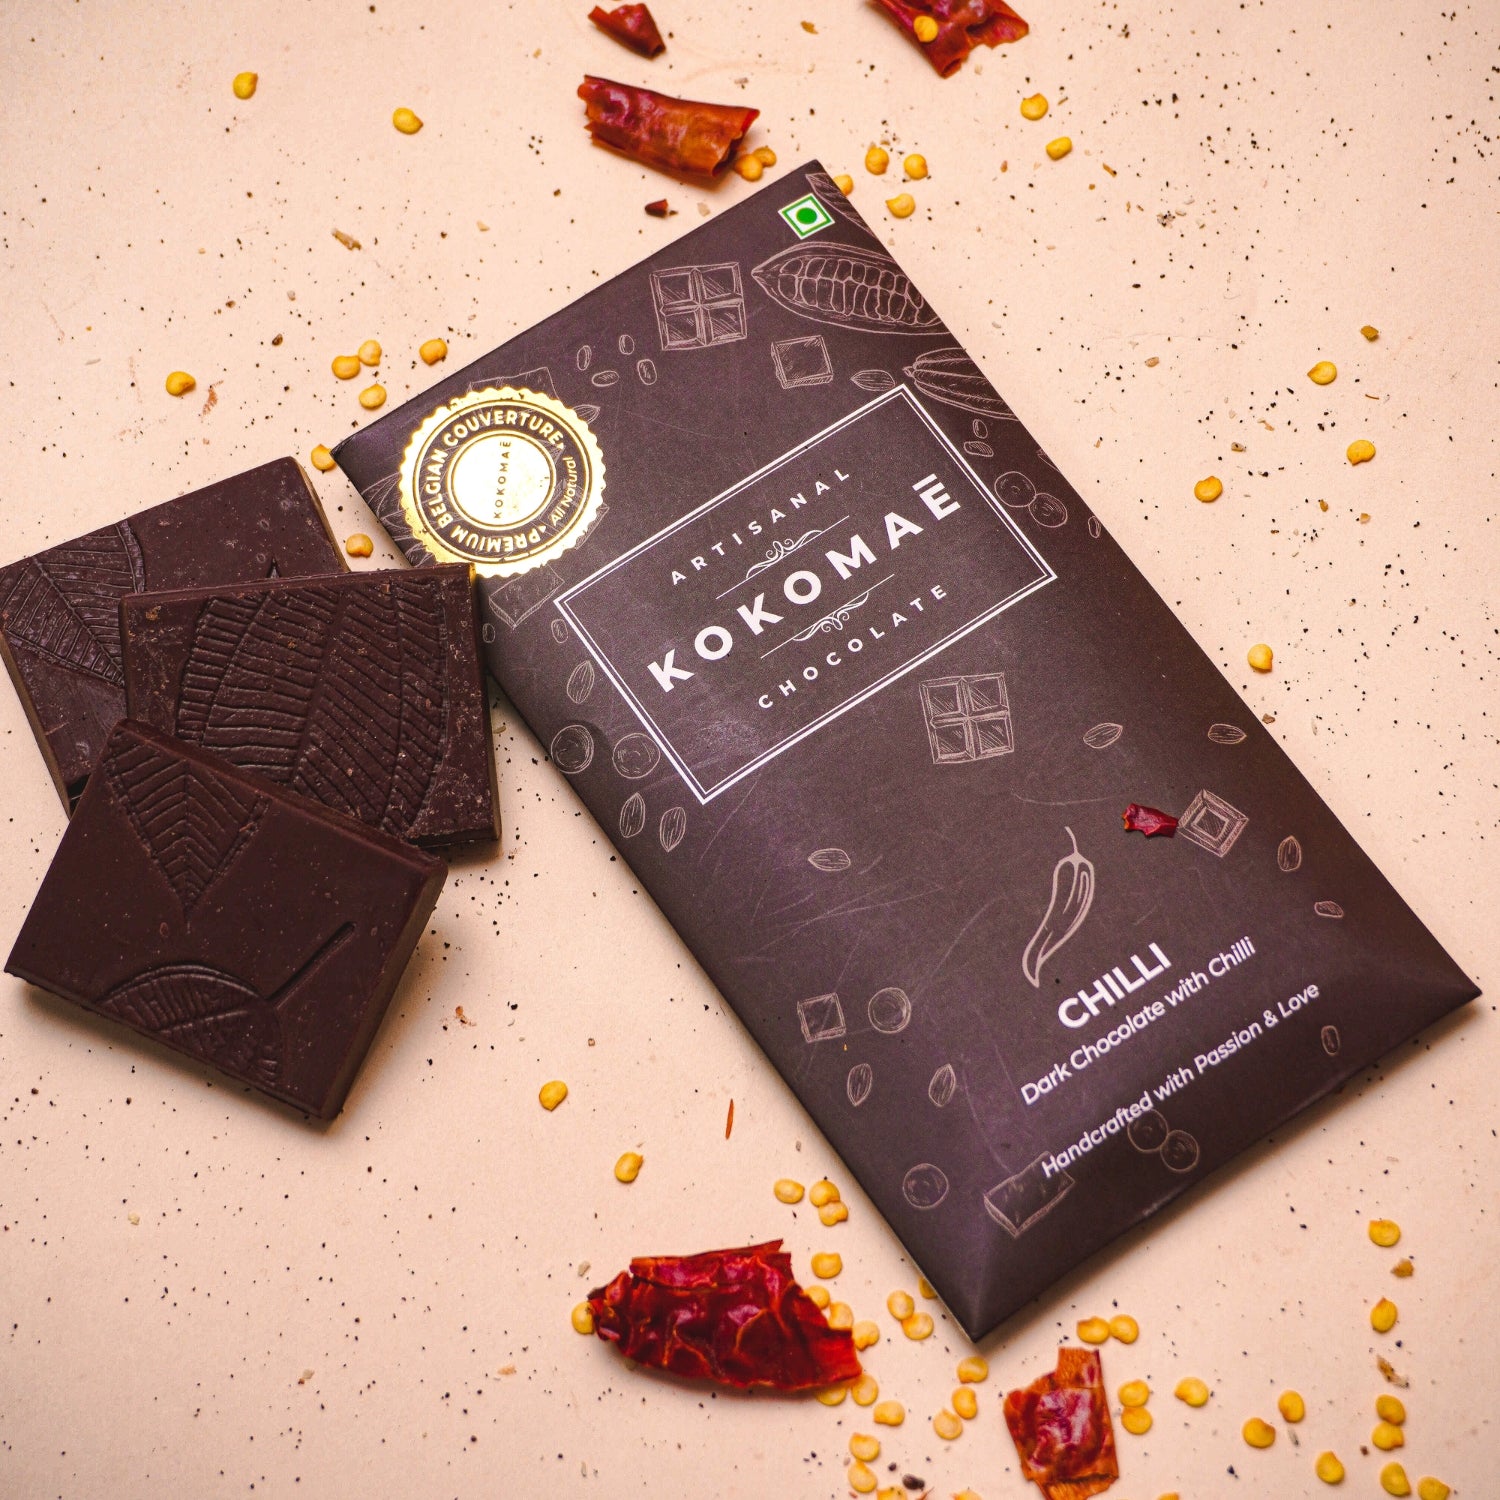 Kokomaē Artisanal Chocolate Hamper for Diwali with 4 Signature Belgian Bars & an offering